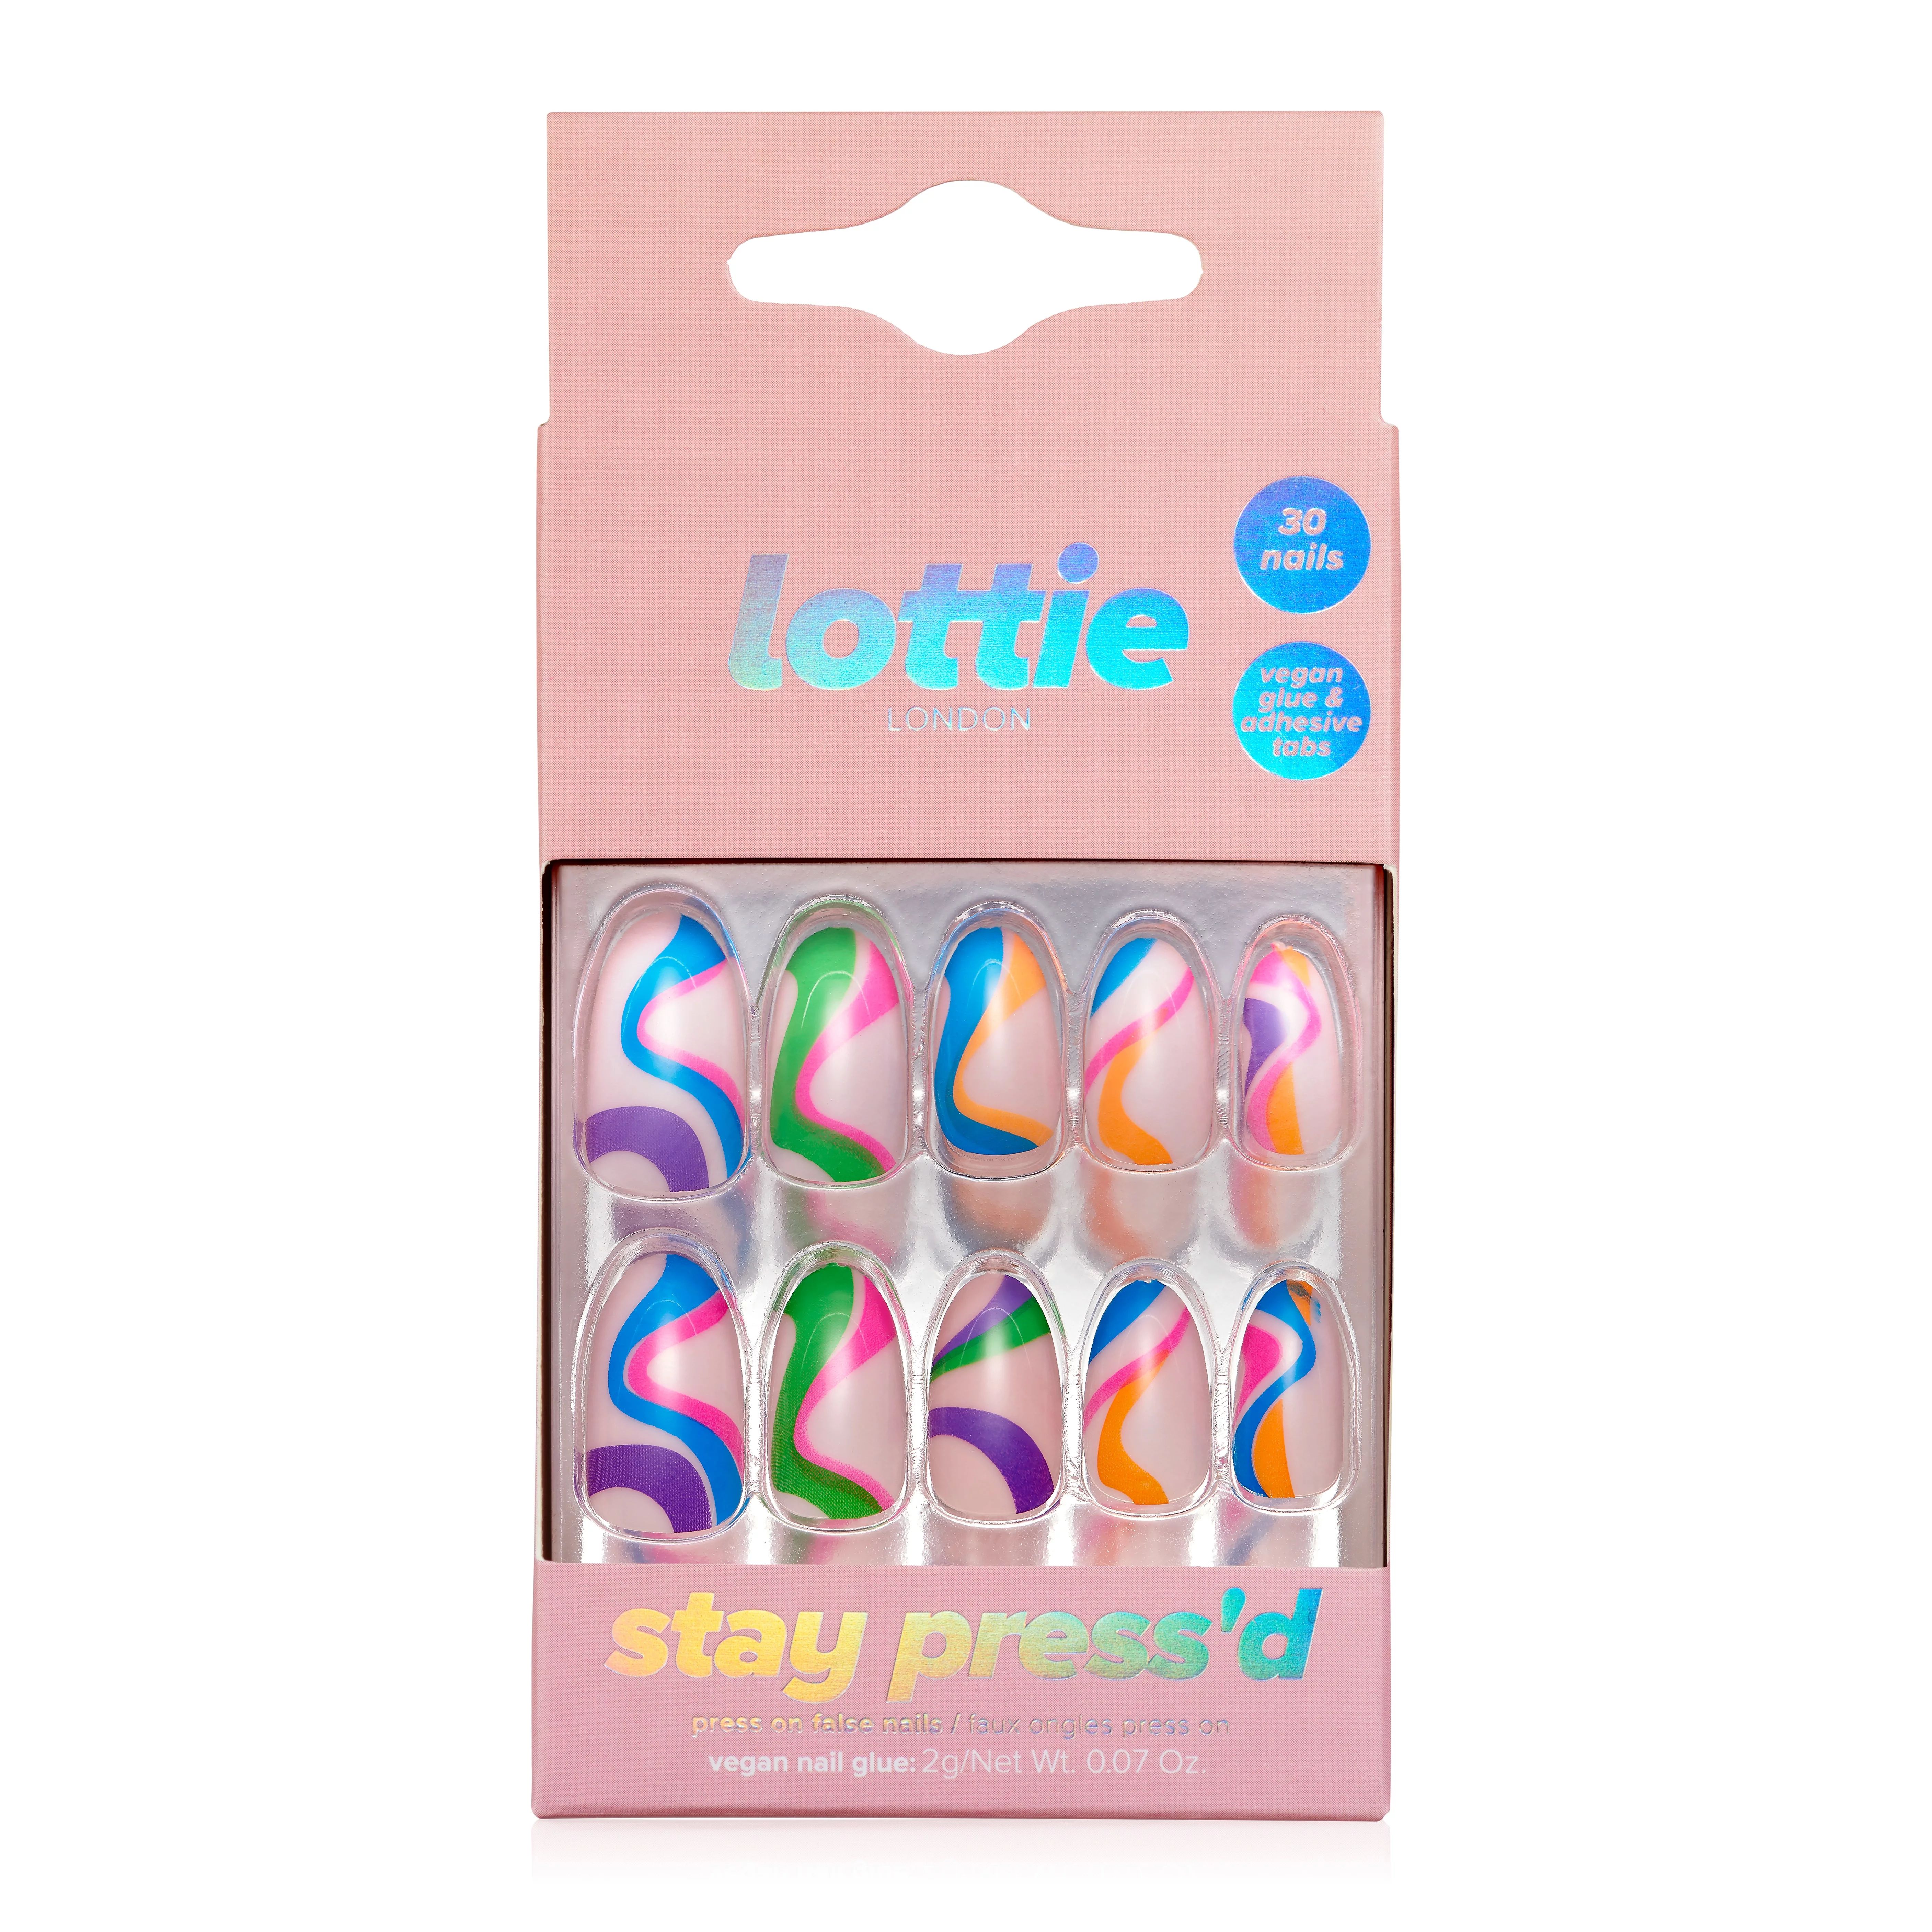 Lottie London Stay Press'd, Press On Nails Set, -Almond shape, Swirls on Swirls , 30 nails | Walmart (US)